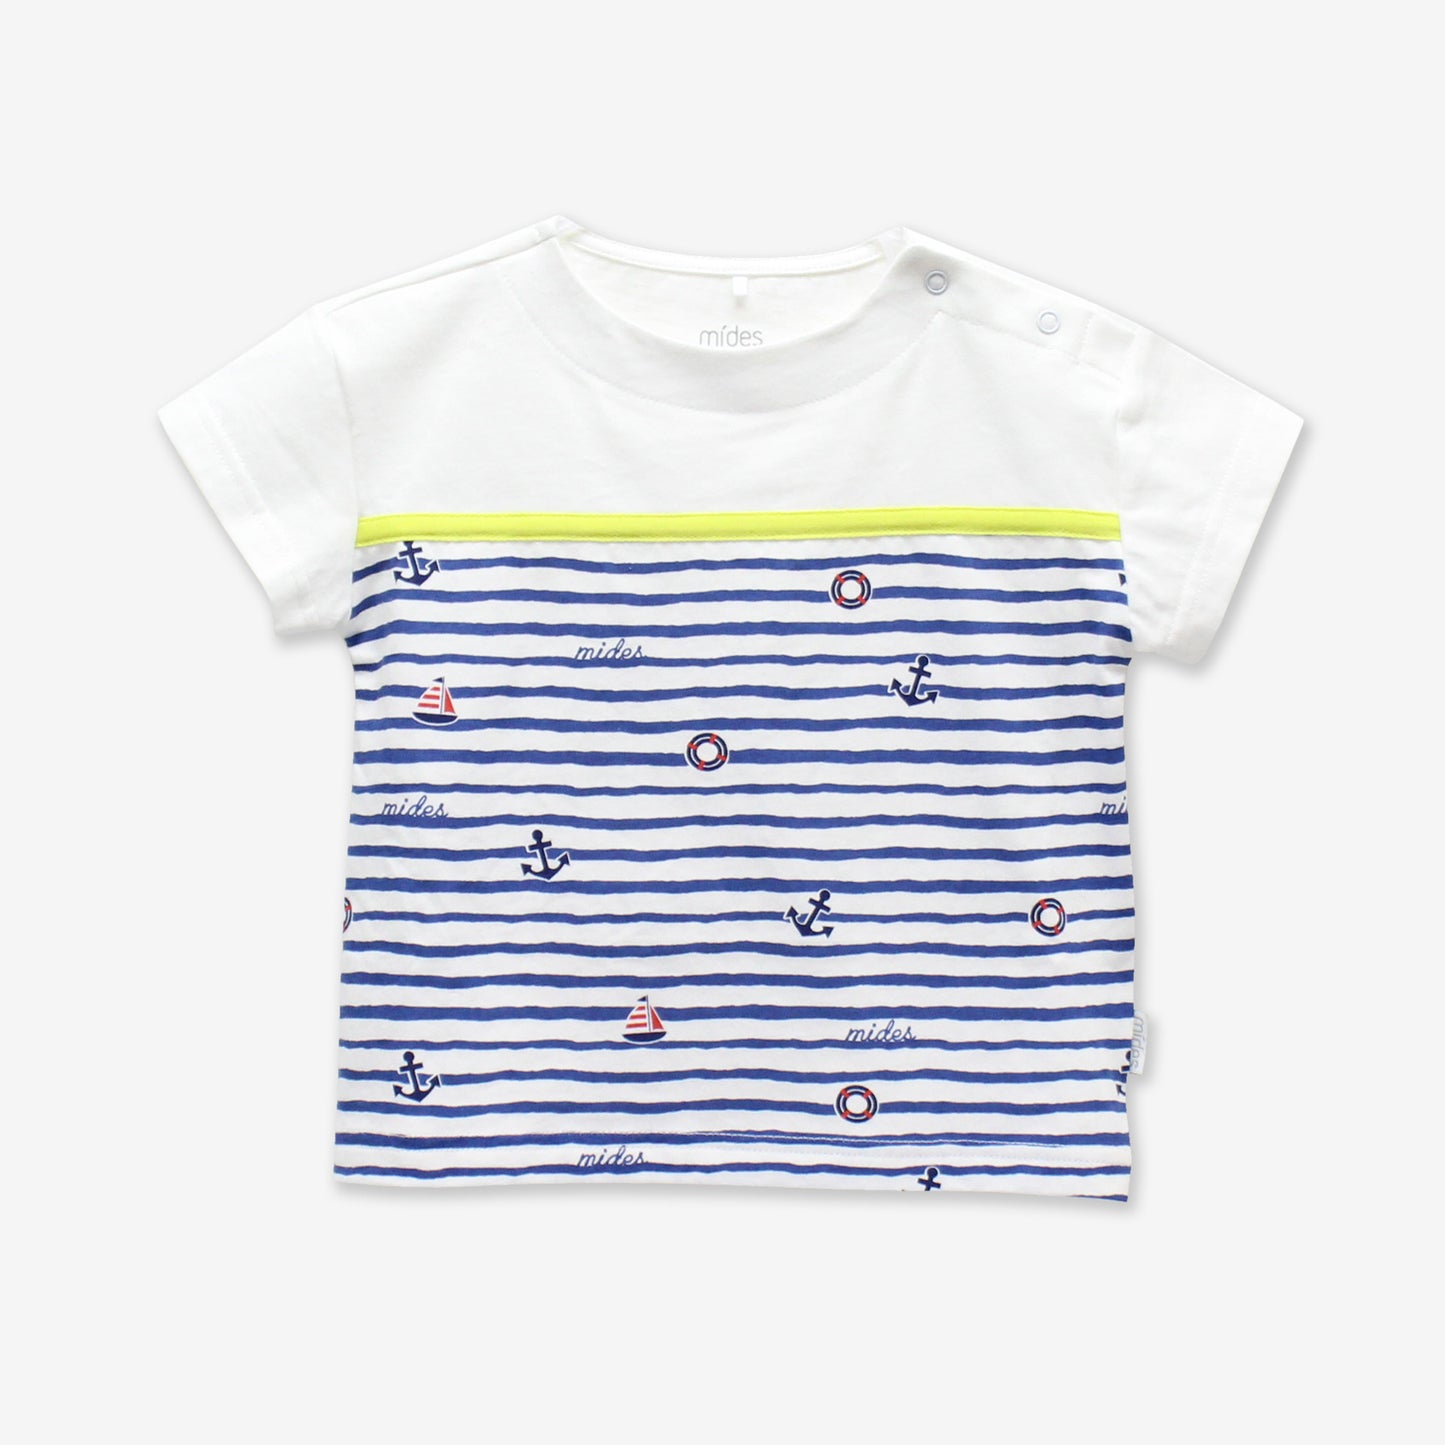 MiDes │ Sailing Journey │ Children Short Sleeve T-shirt (Print/Sailboat)